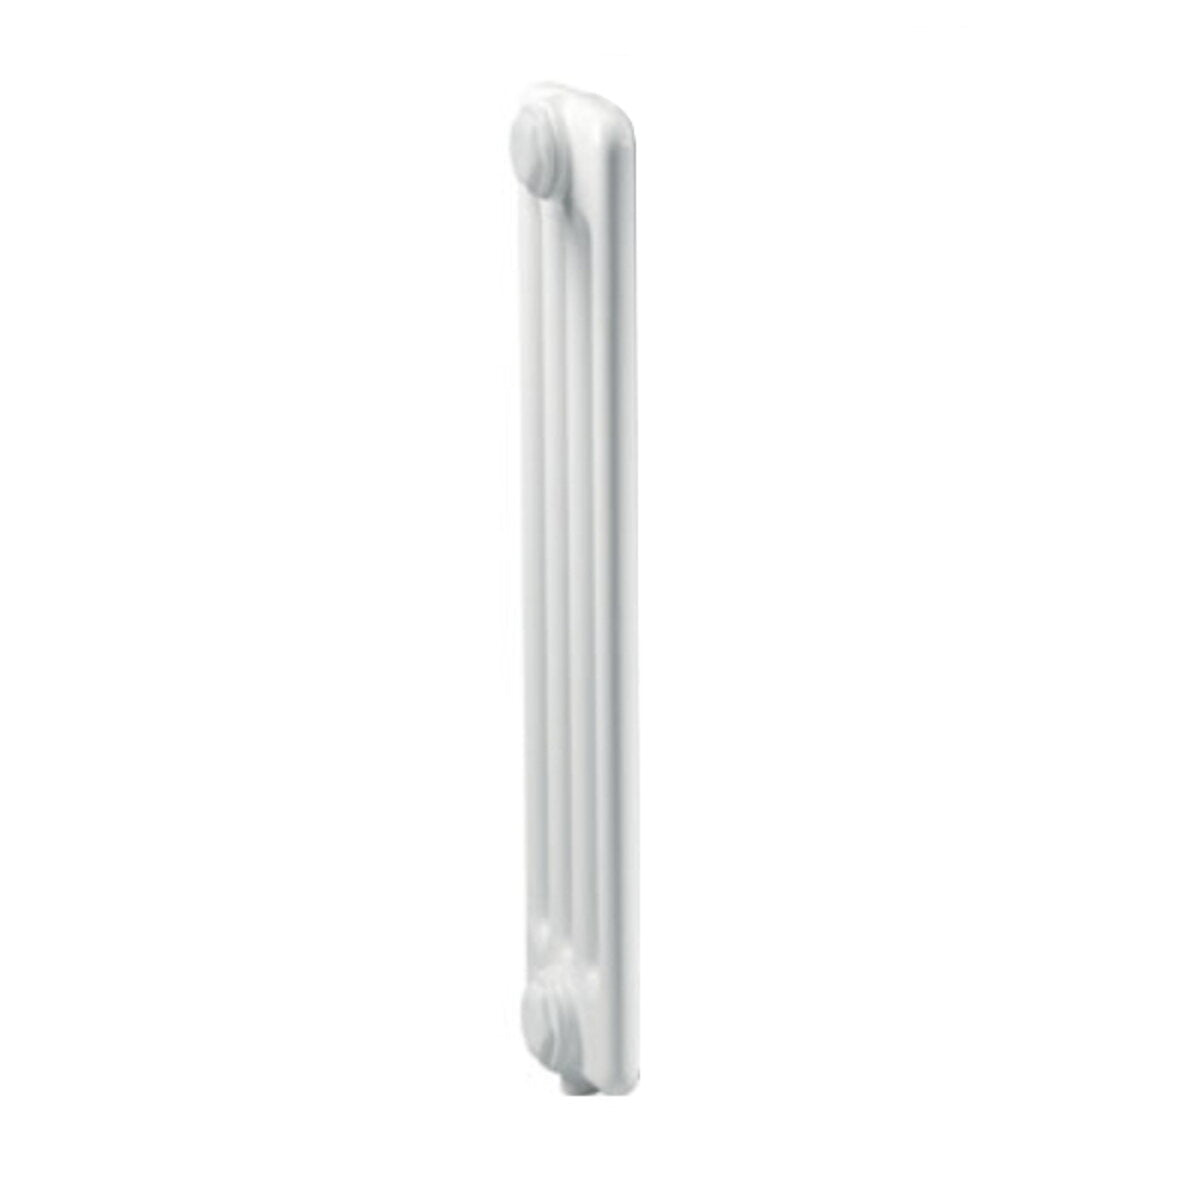 Ercos Comby steel column radiator single element 3 columns center distance 600 mm